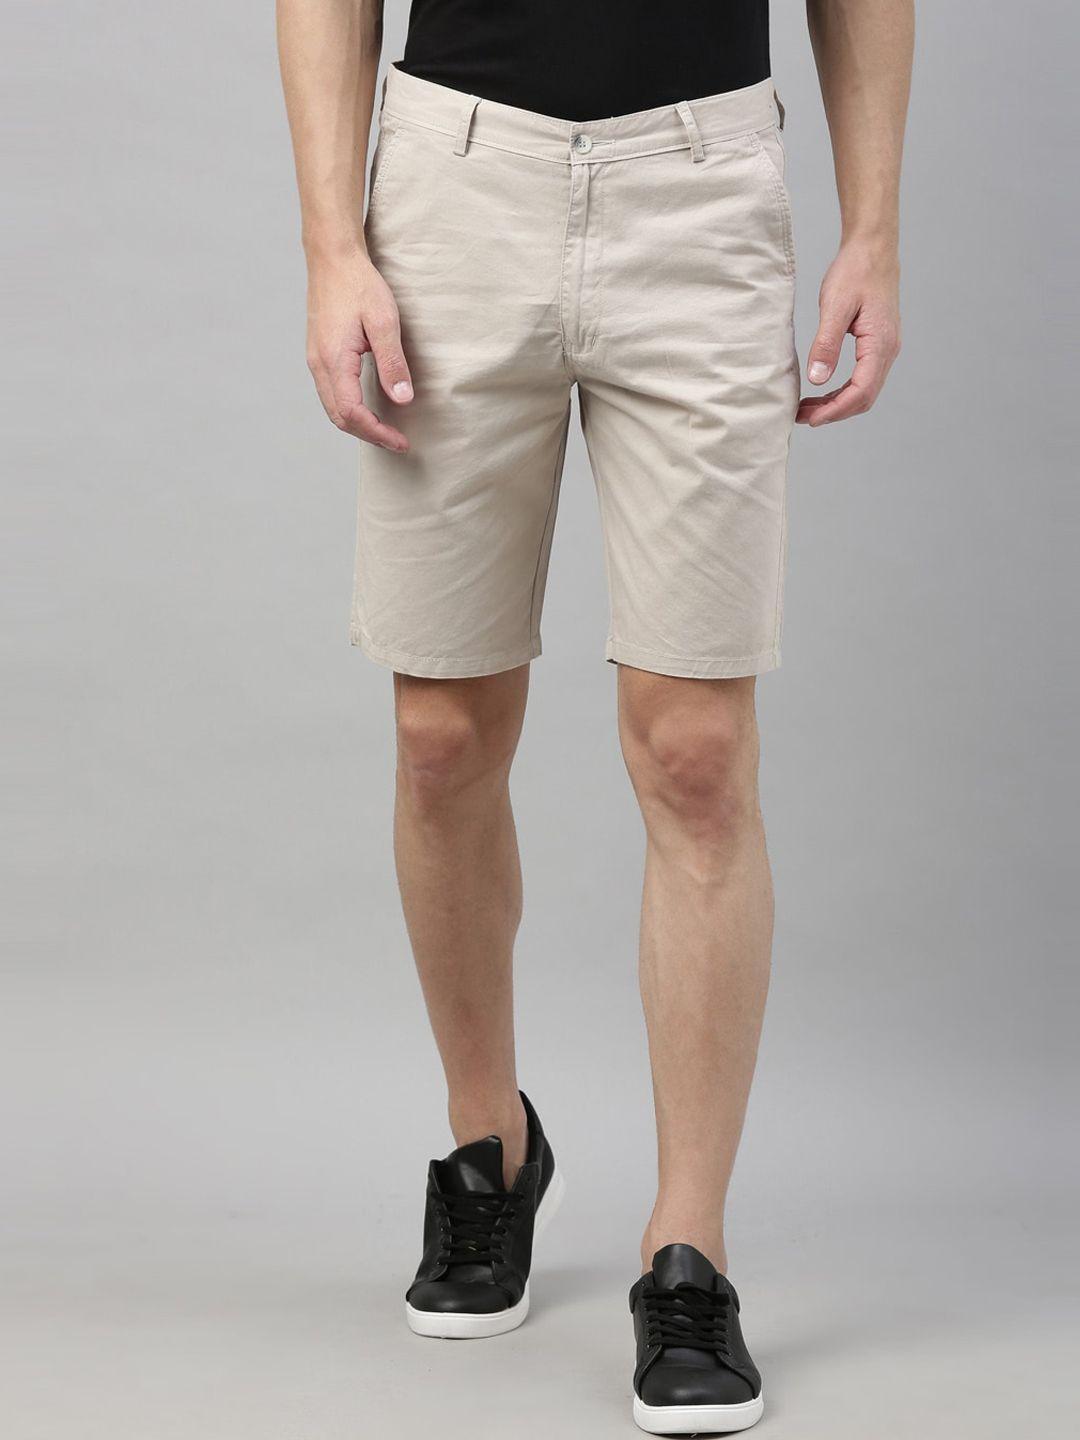 bushirt-men-cream-coloured-pure-cotton-chino-shorts